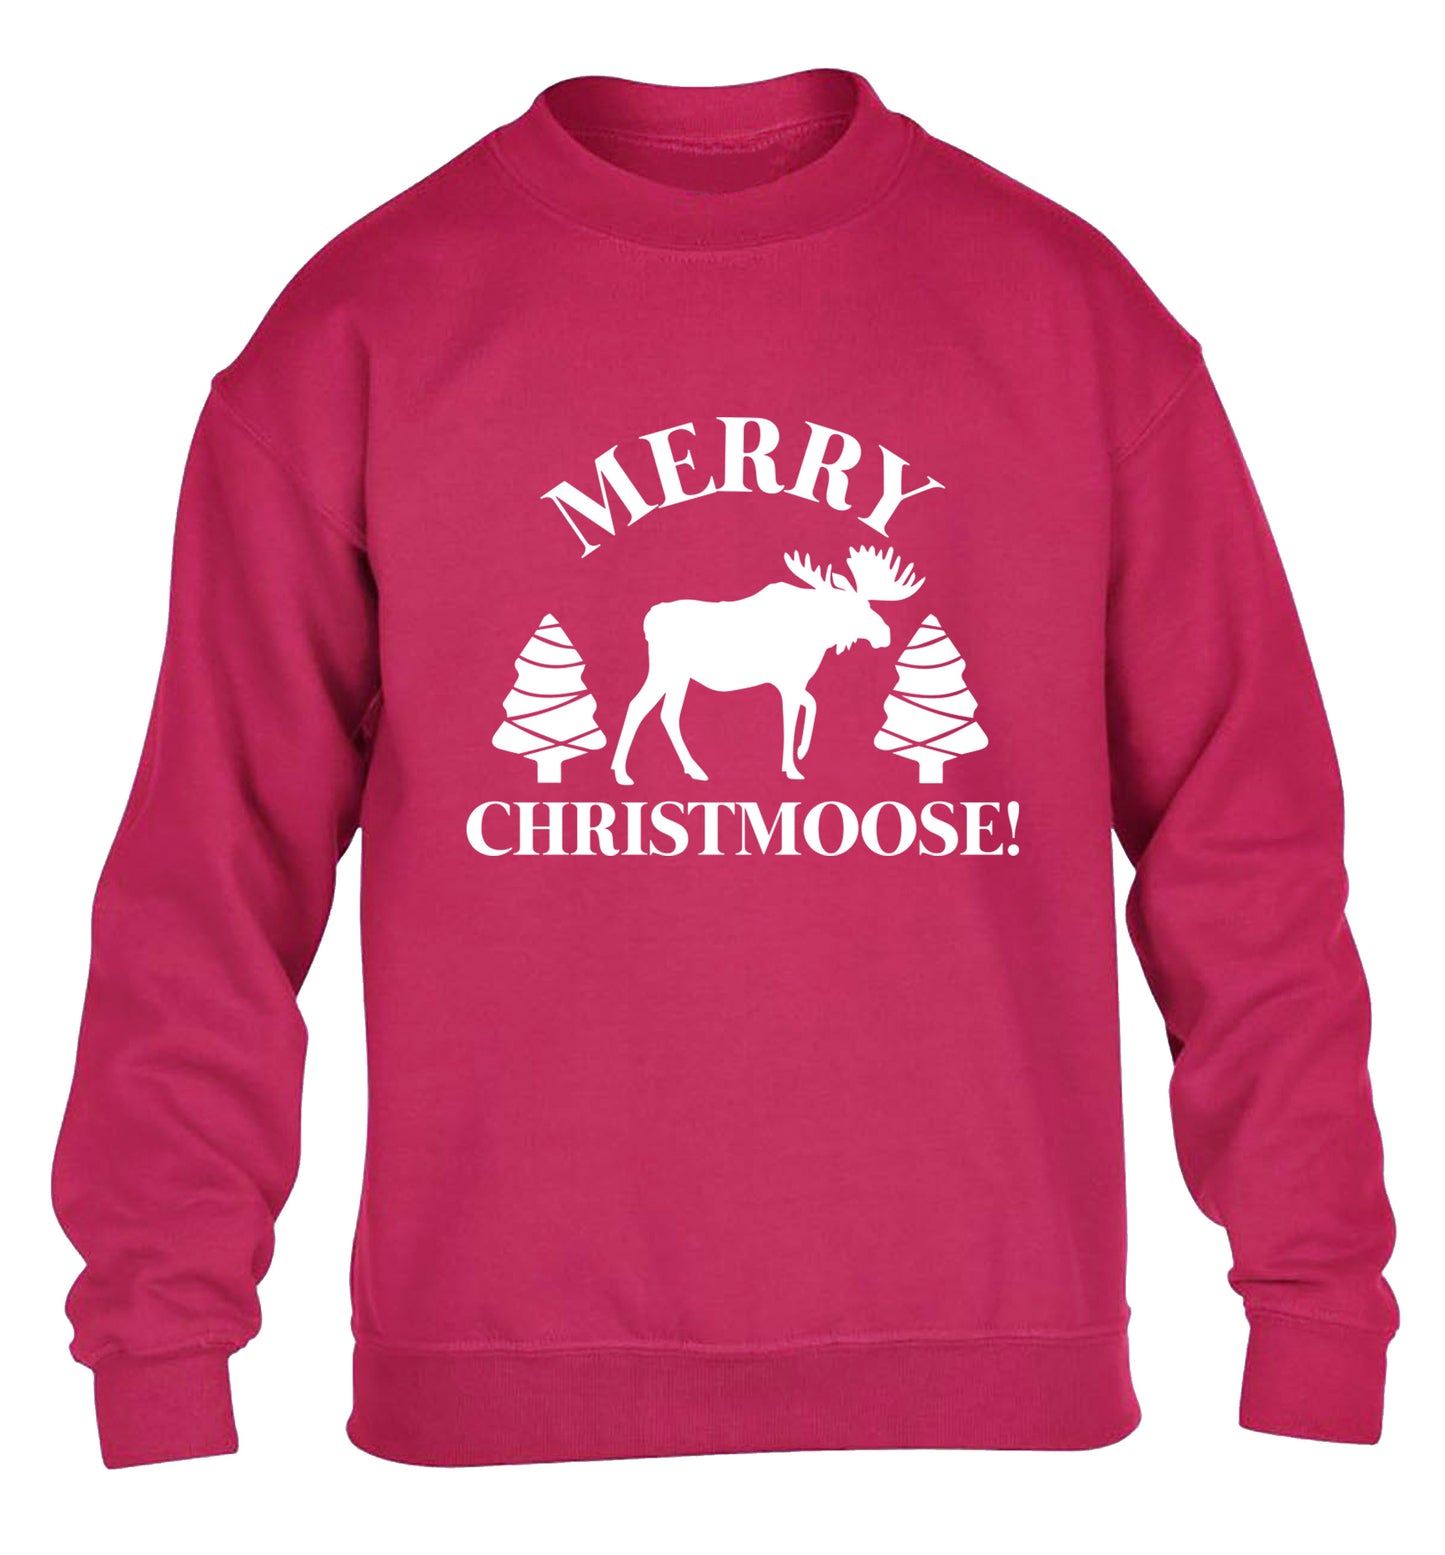 Merry Christmoose children's pink sweater 12-14 Years